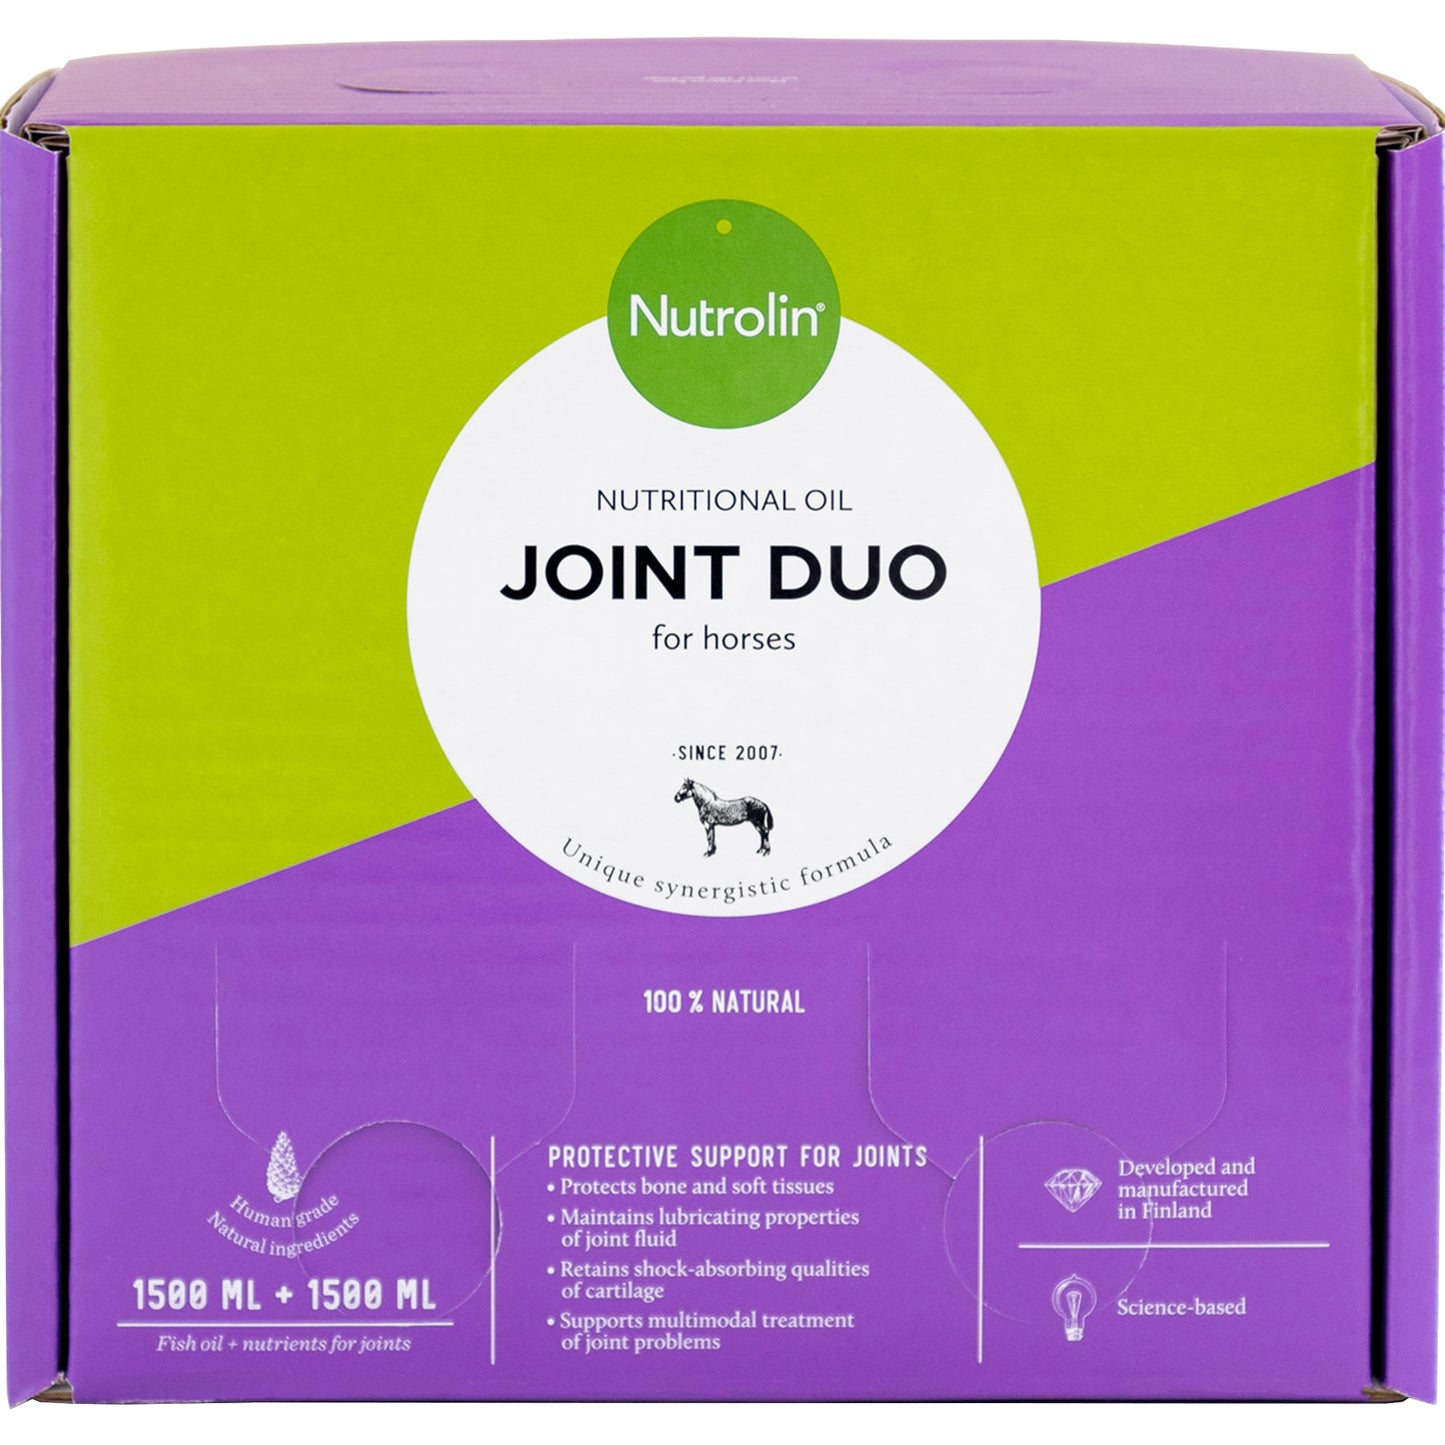 Nutrolin Horse Joint Duo